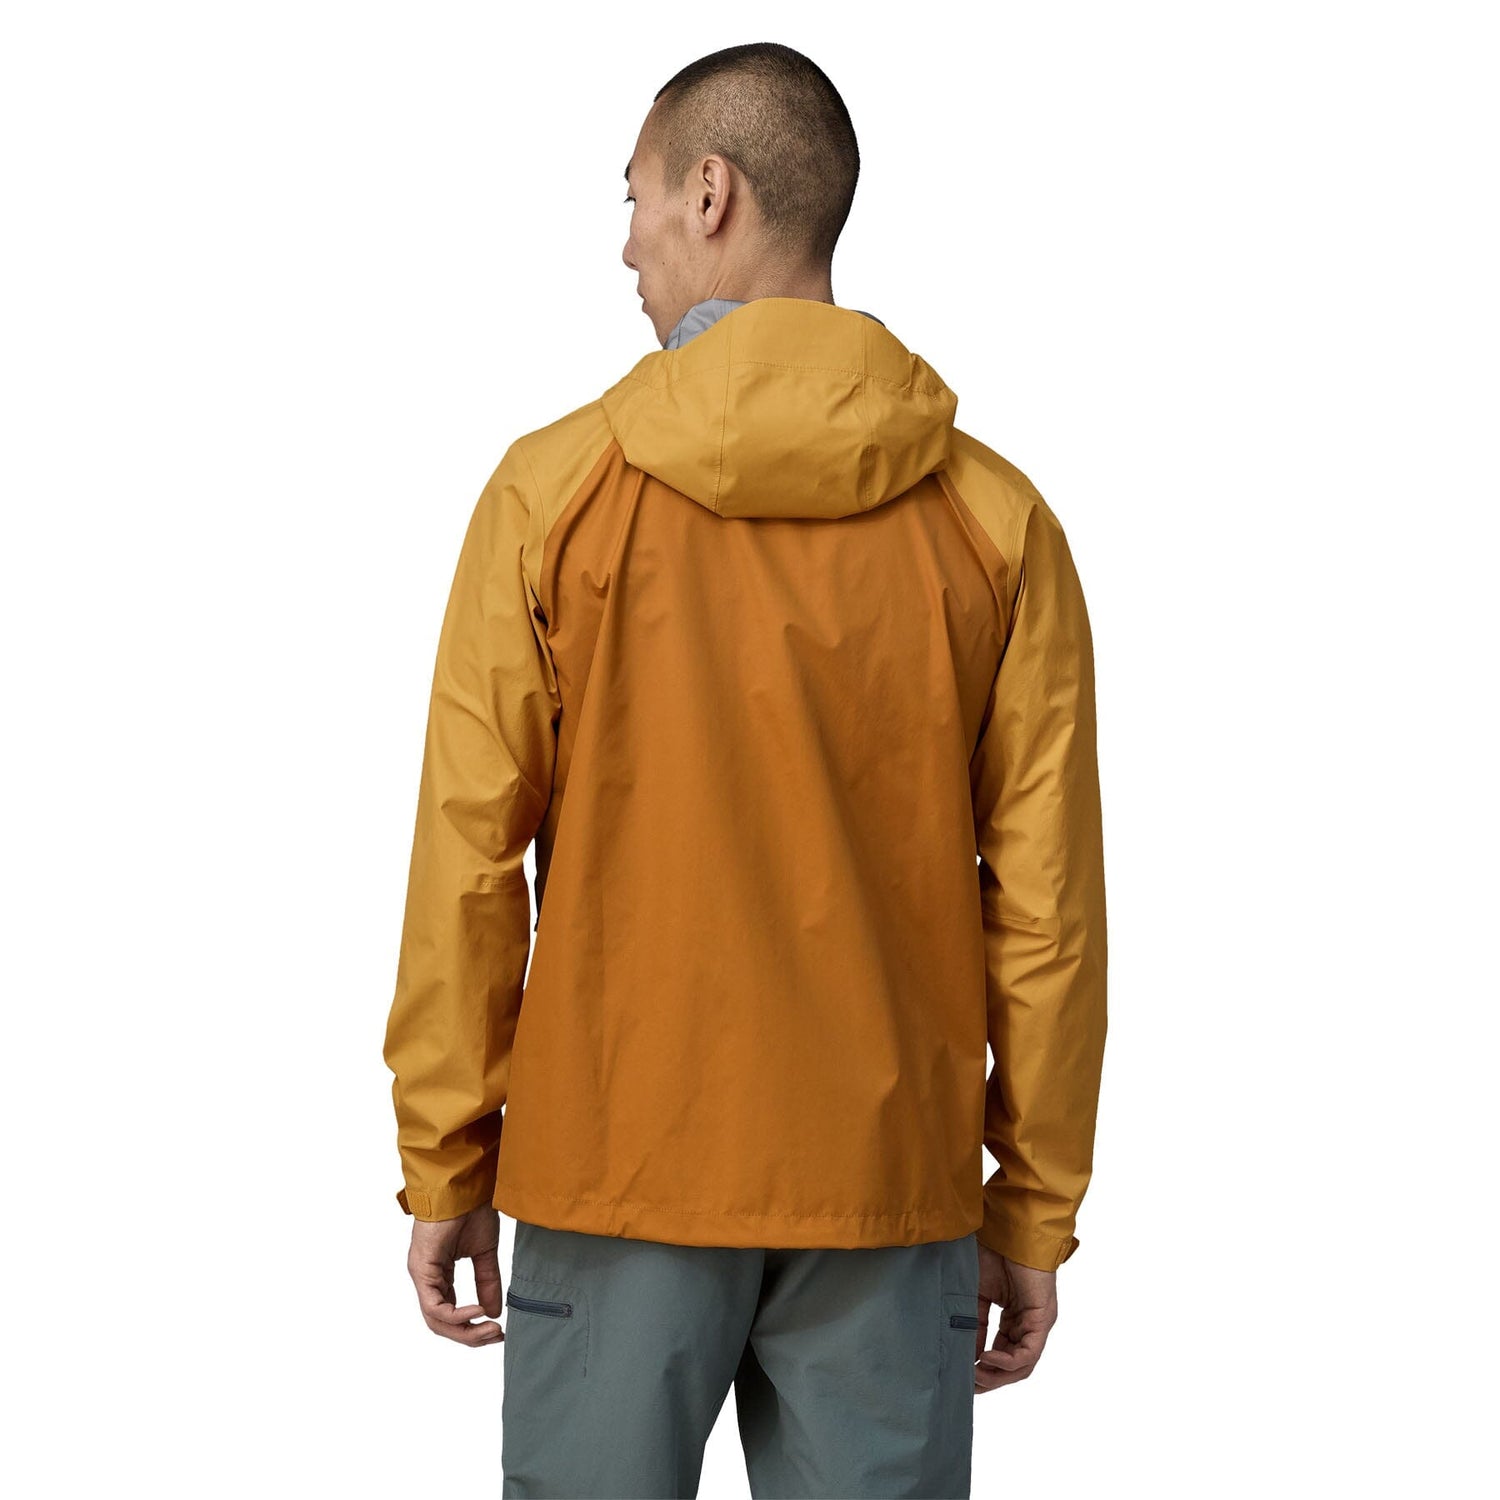 Patagonia M's Torrentshell 3L Jacket - 100% Recycled Nylon Golden Caramel Jacket